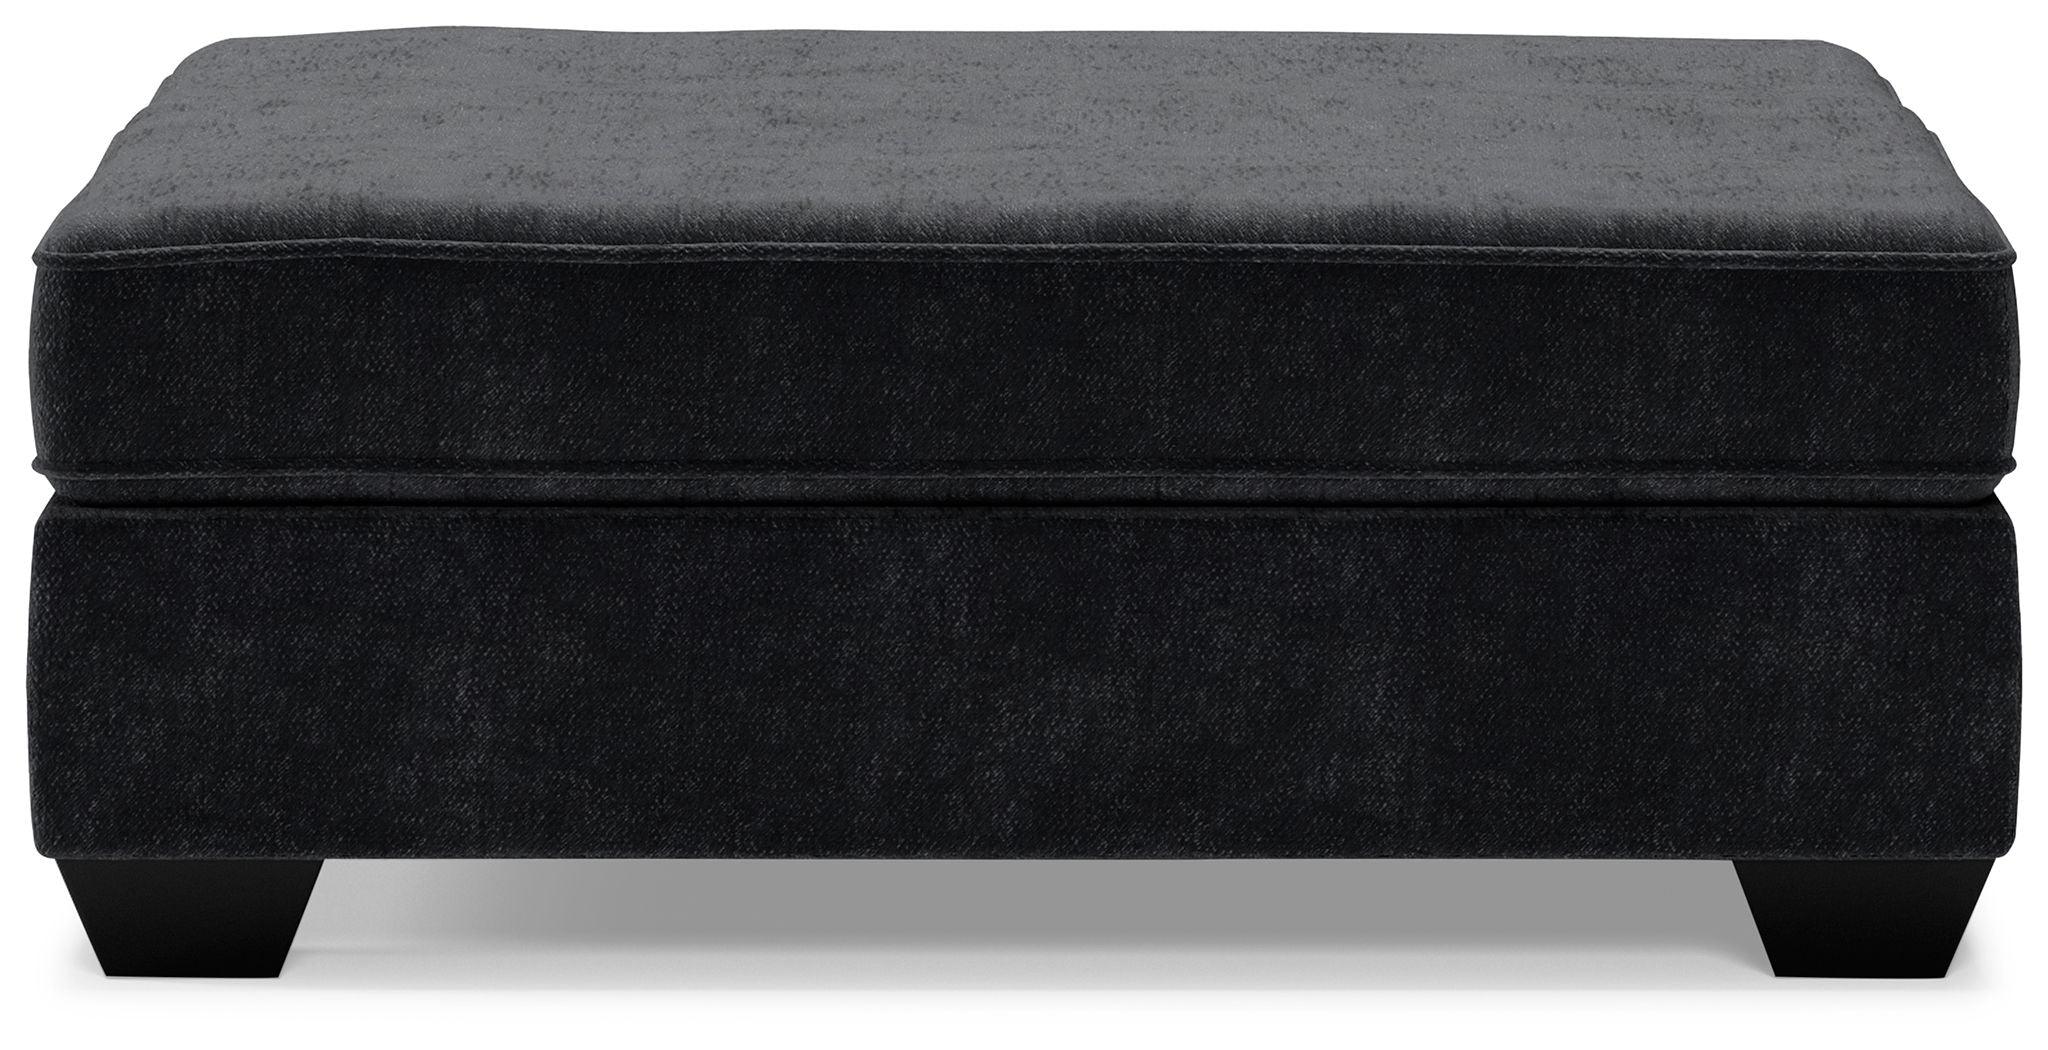 Ashley Furniture - Lavernett - Charcoal - Oversized Accent Ottoman - 5th Avenue Furniture